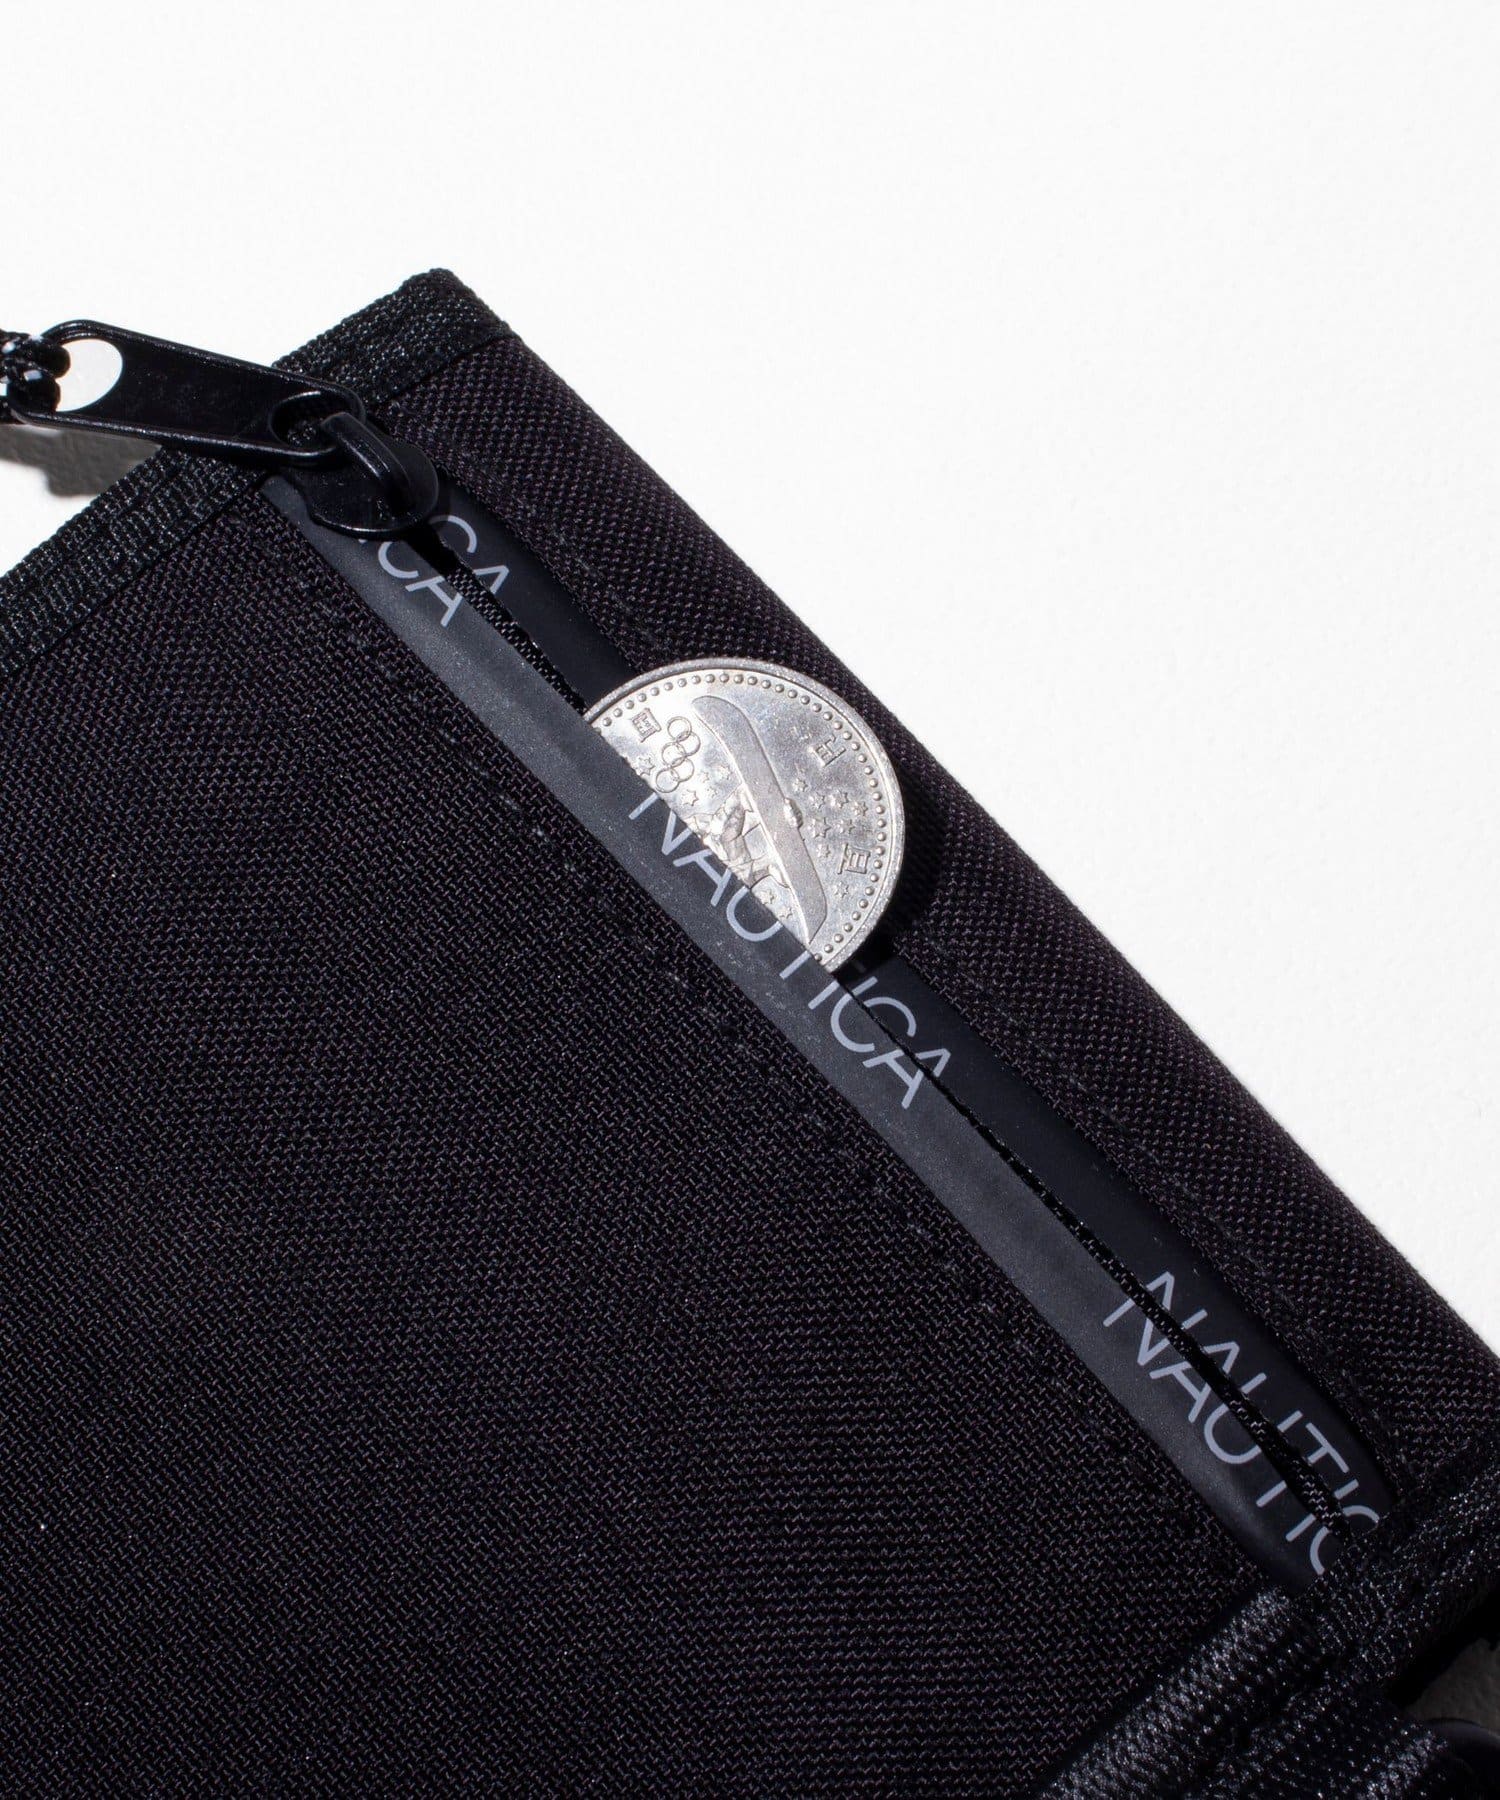 FREDY & GLOSTER(フレディ アンド グロスター) 【NAUTICA】ミニ財布 ミニウォレット Necklace Wallet